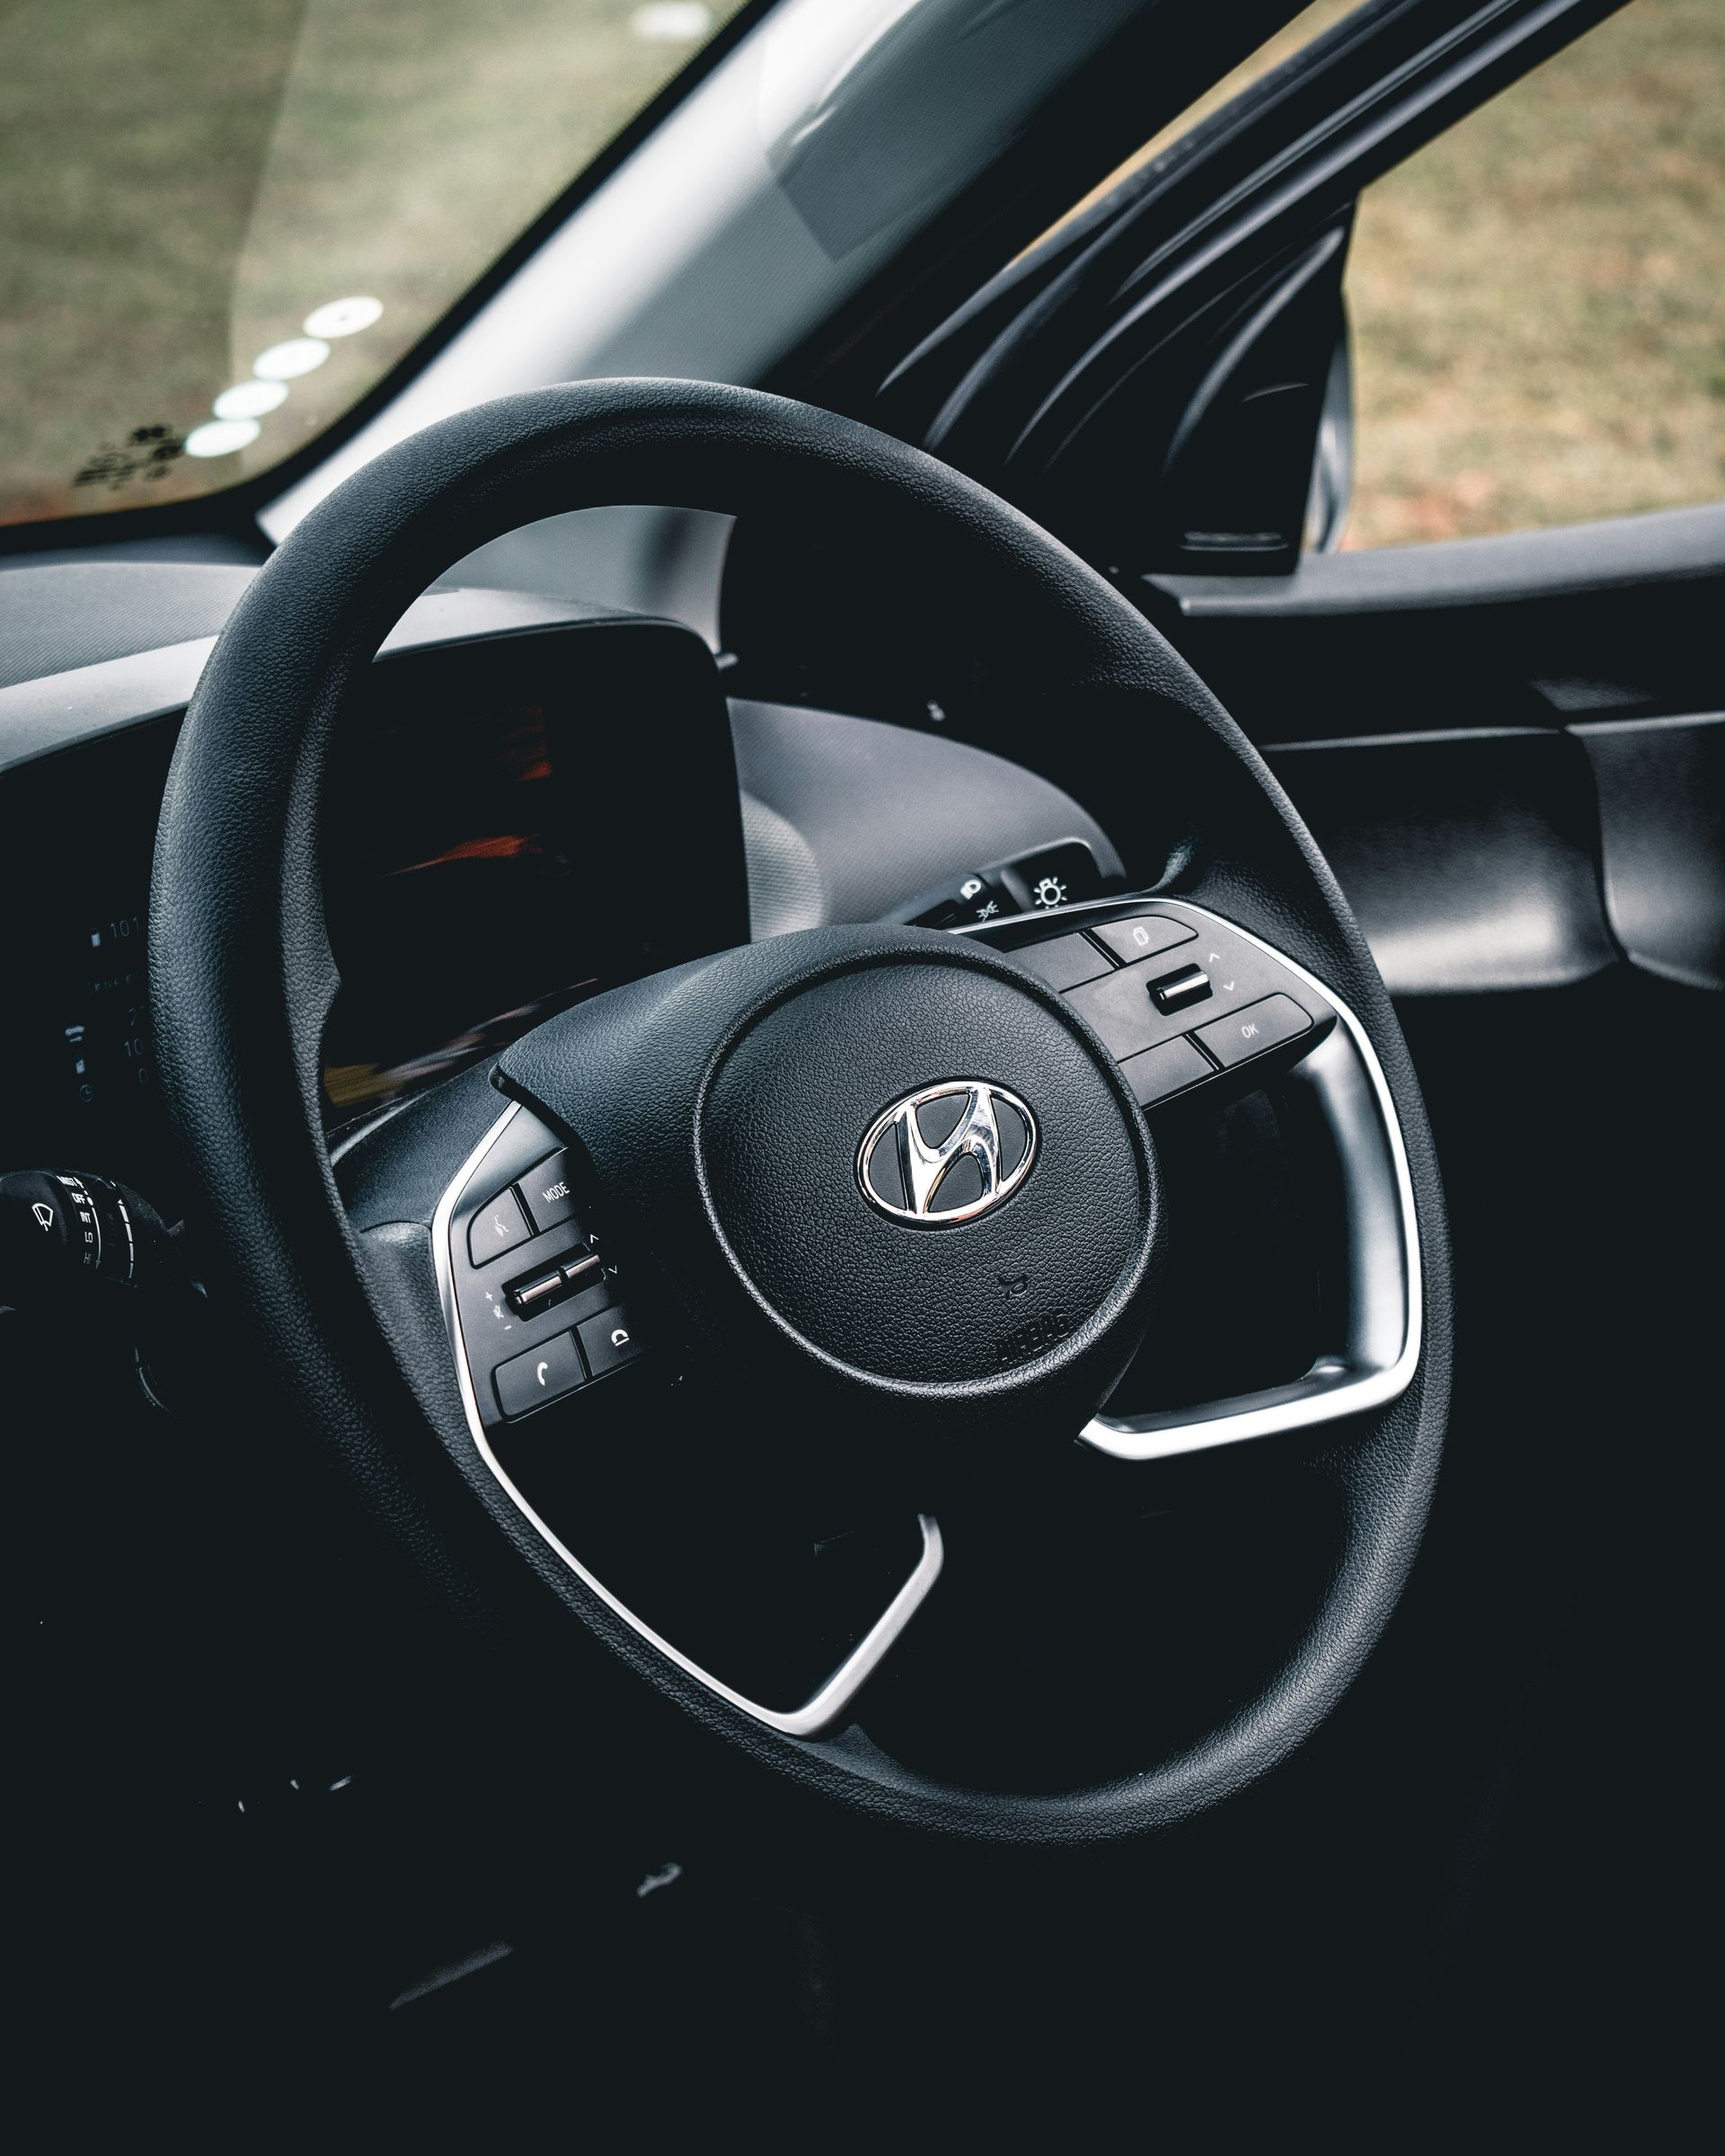 Black steering wheel of a Hyundai car.